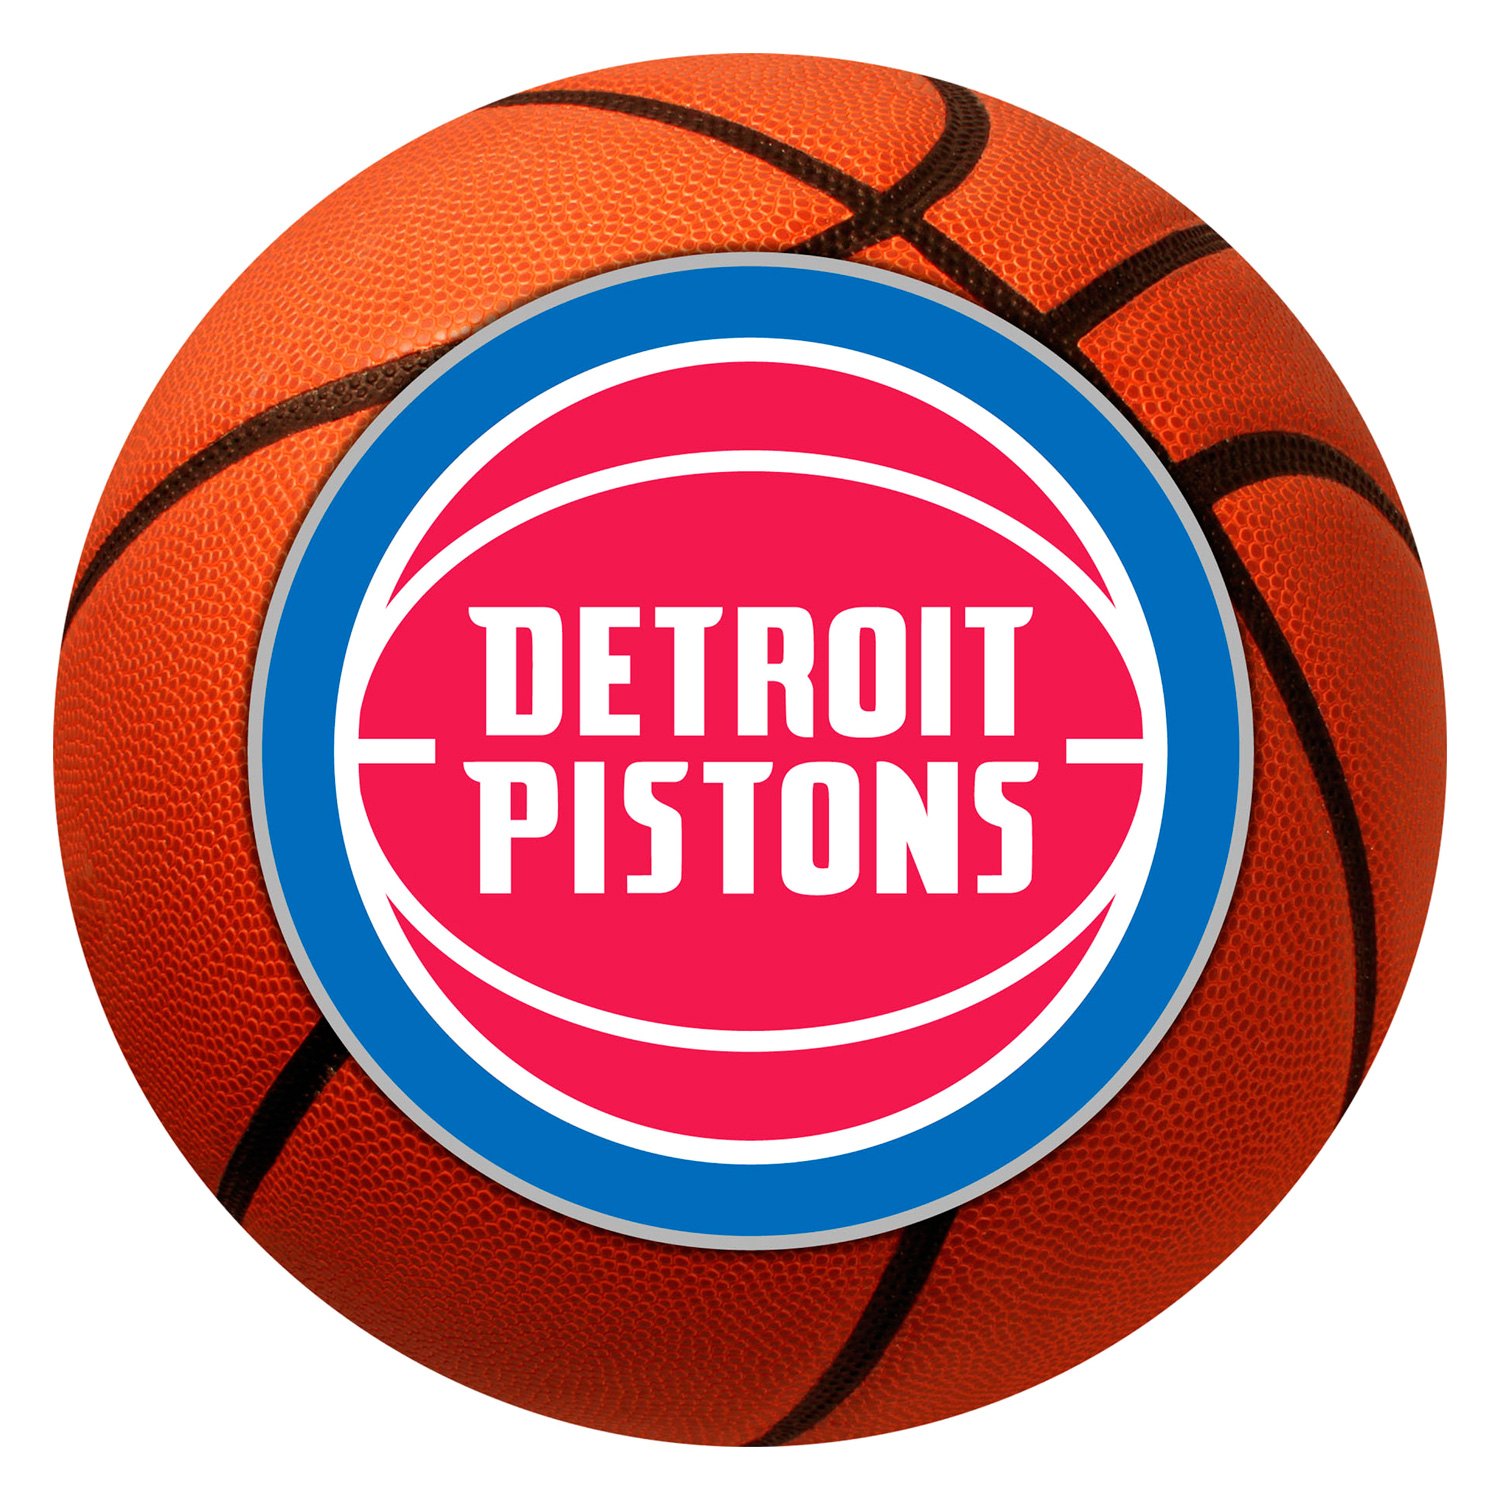 Detroit pistons. Детройт Пистонс логотип. НБА – Детройт Пистонс. Баскетбольное поле Detroit Pistons.